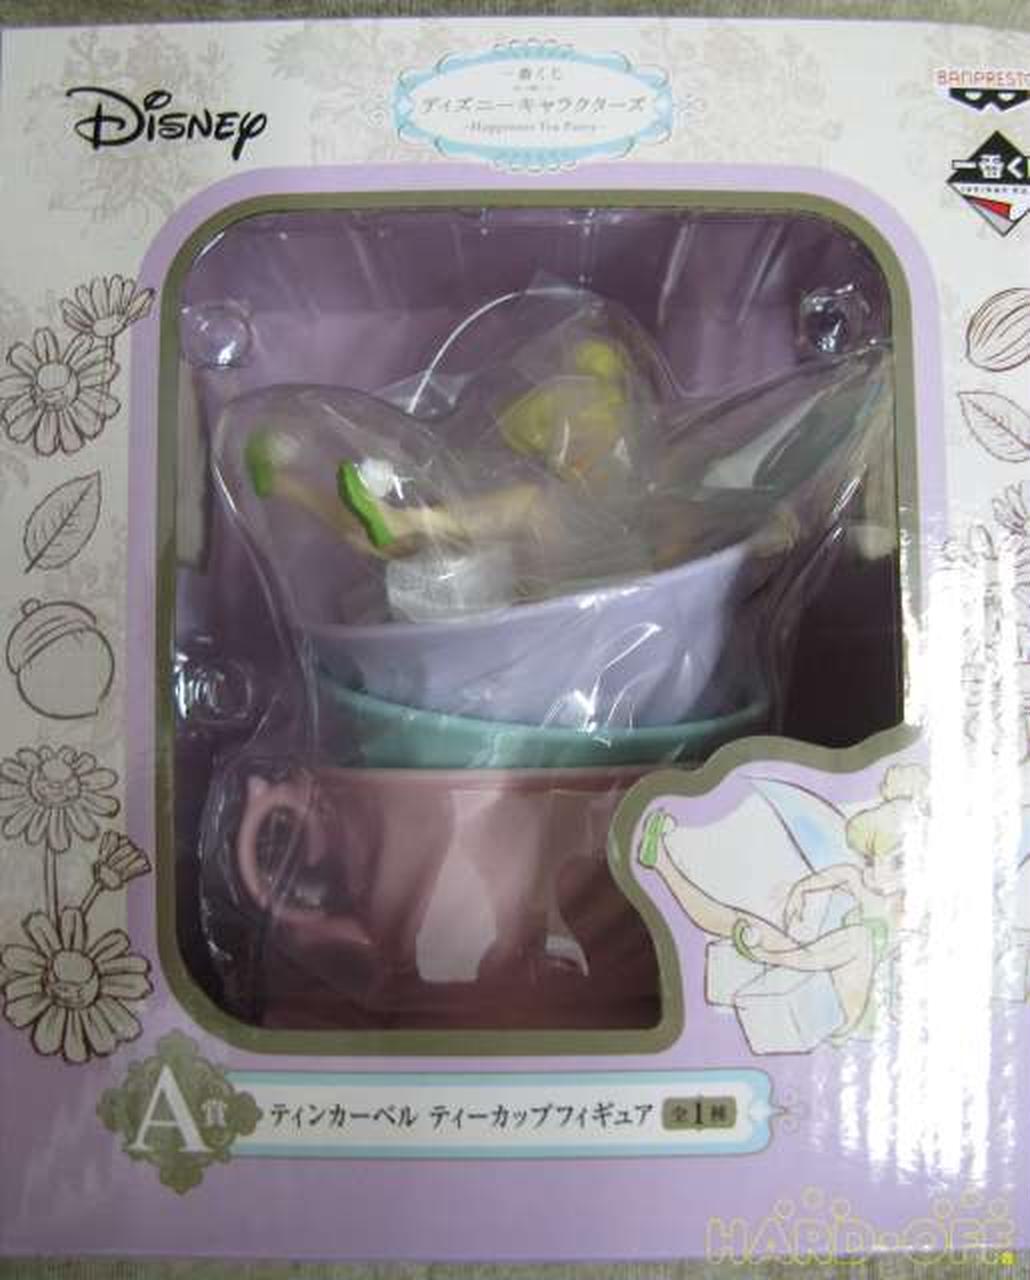 Banpresto A Prize Tinker Bell Tea Cup Figure Ichibankuji Disney Characters Happi